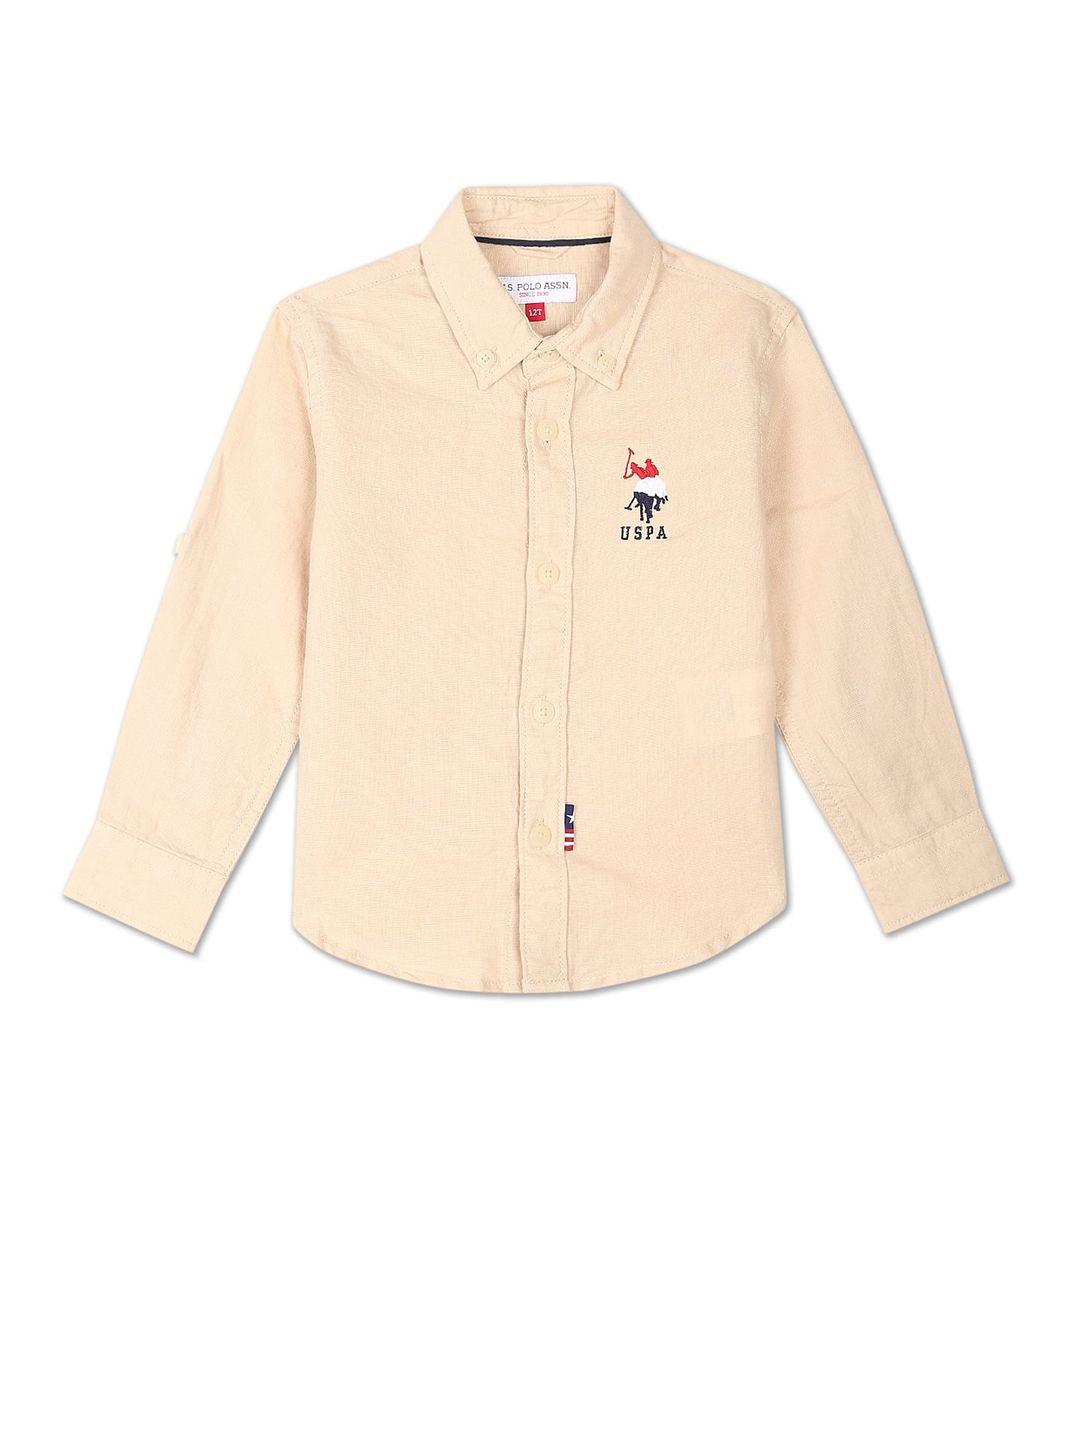 u.s.-polo-assn.-kids-boys-casual-cotton-linen-shirt